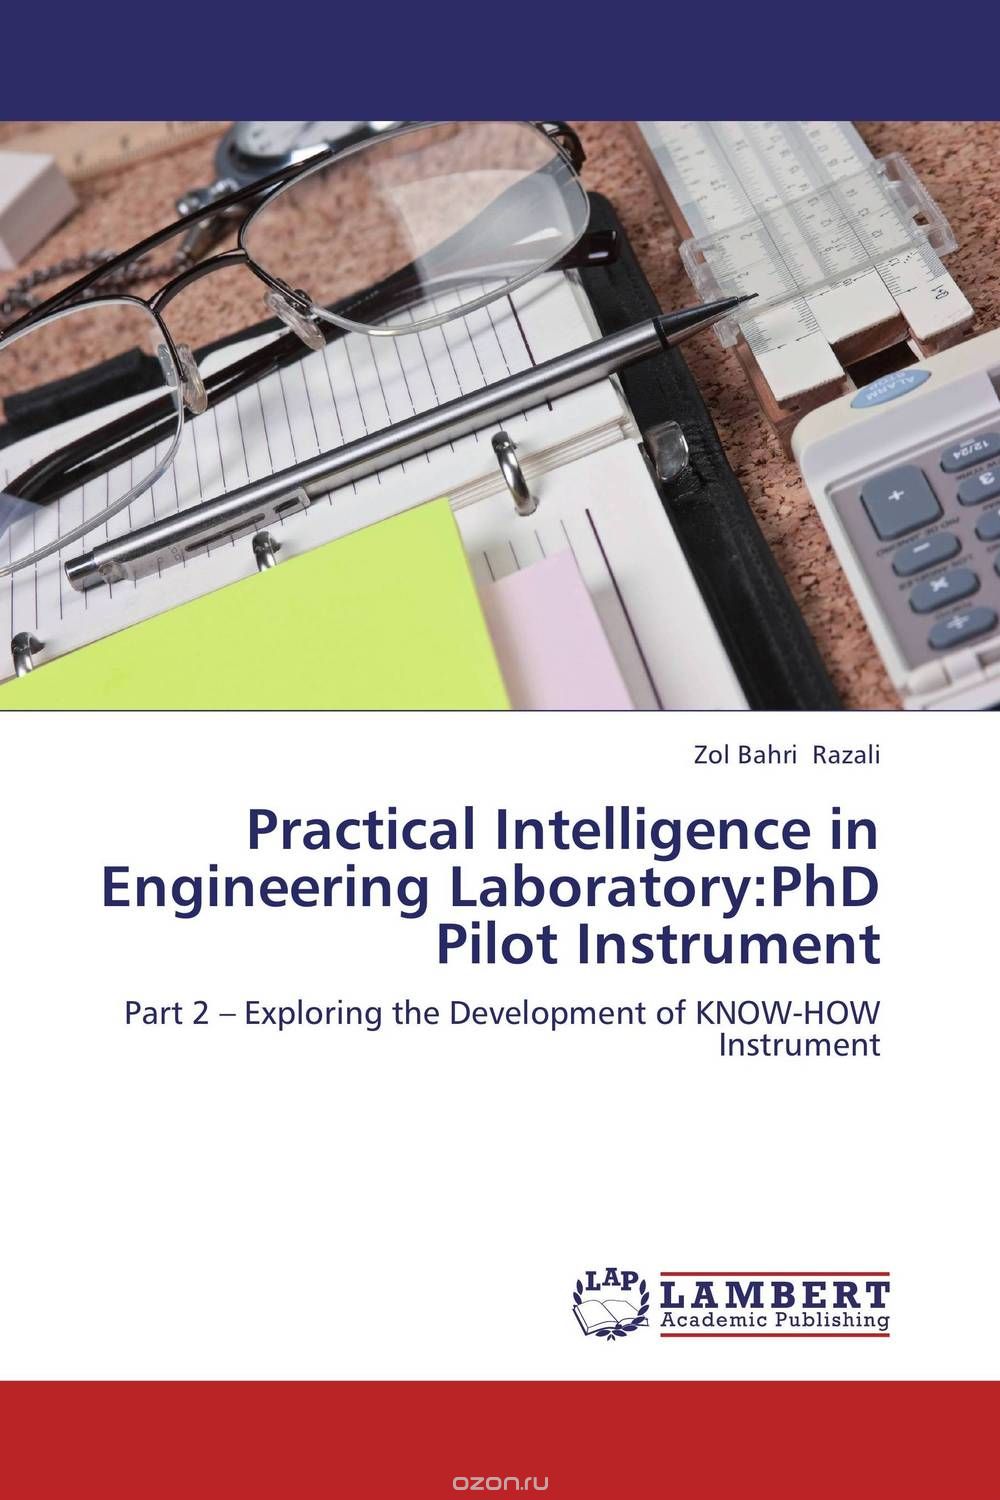 Скачать книгу "Practical Intelligence in Engineering Laboratory:PhD Pilot Instrument"